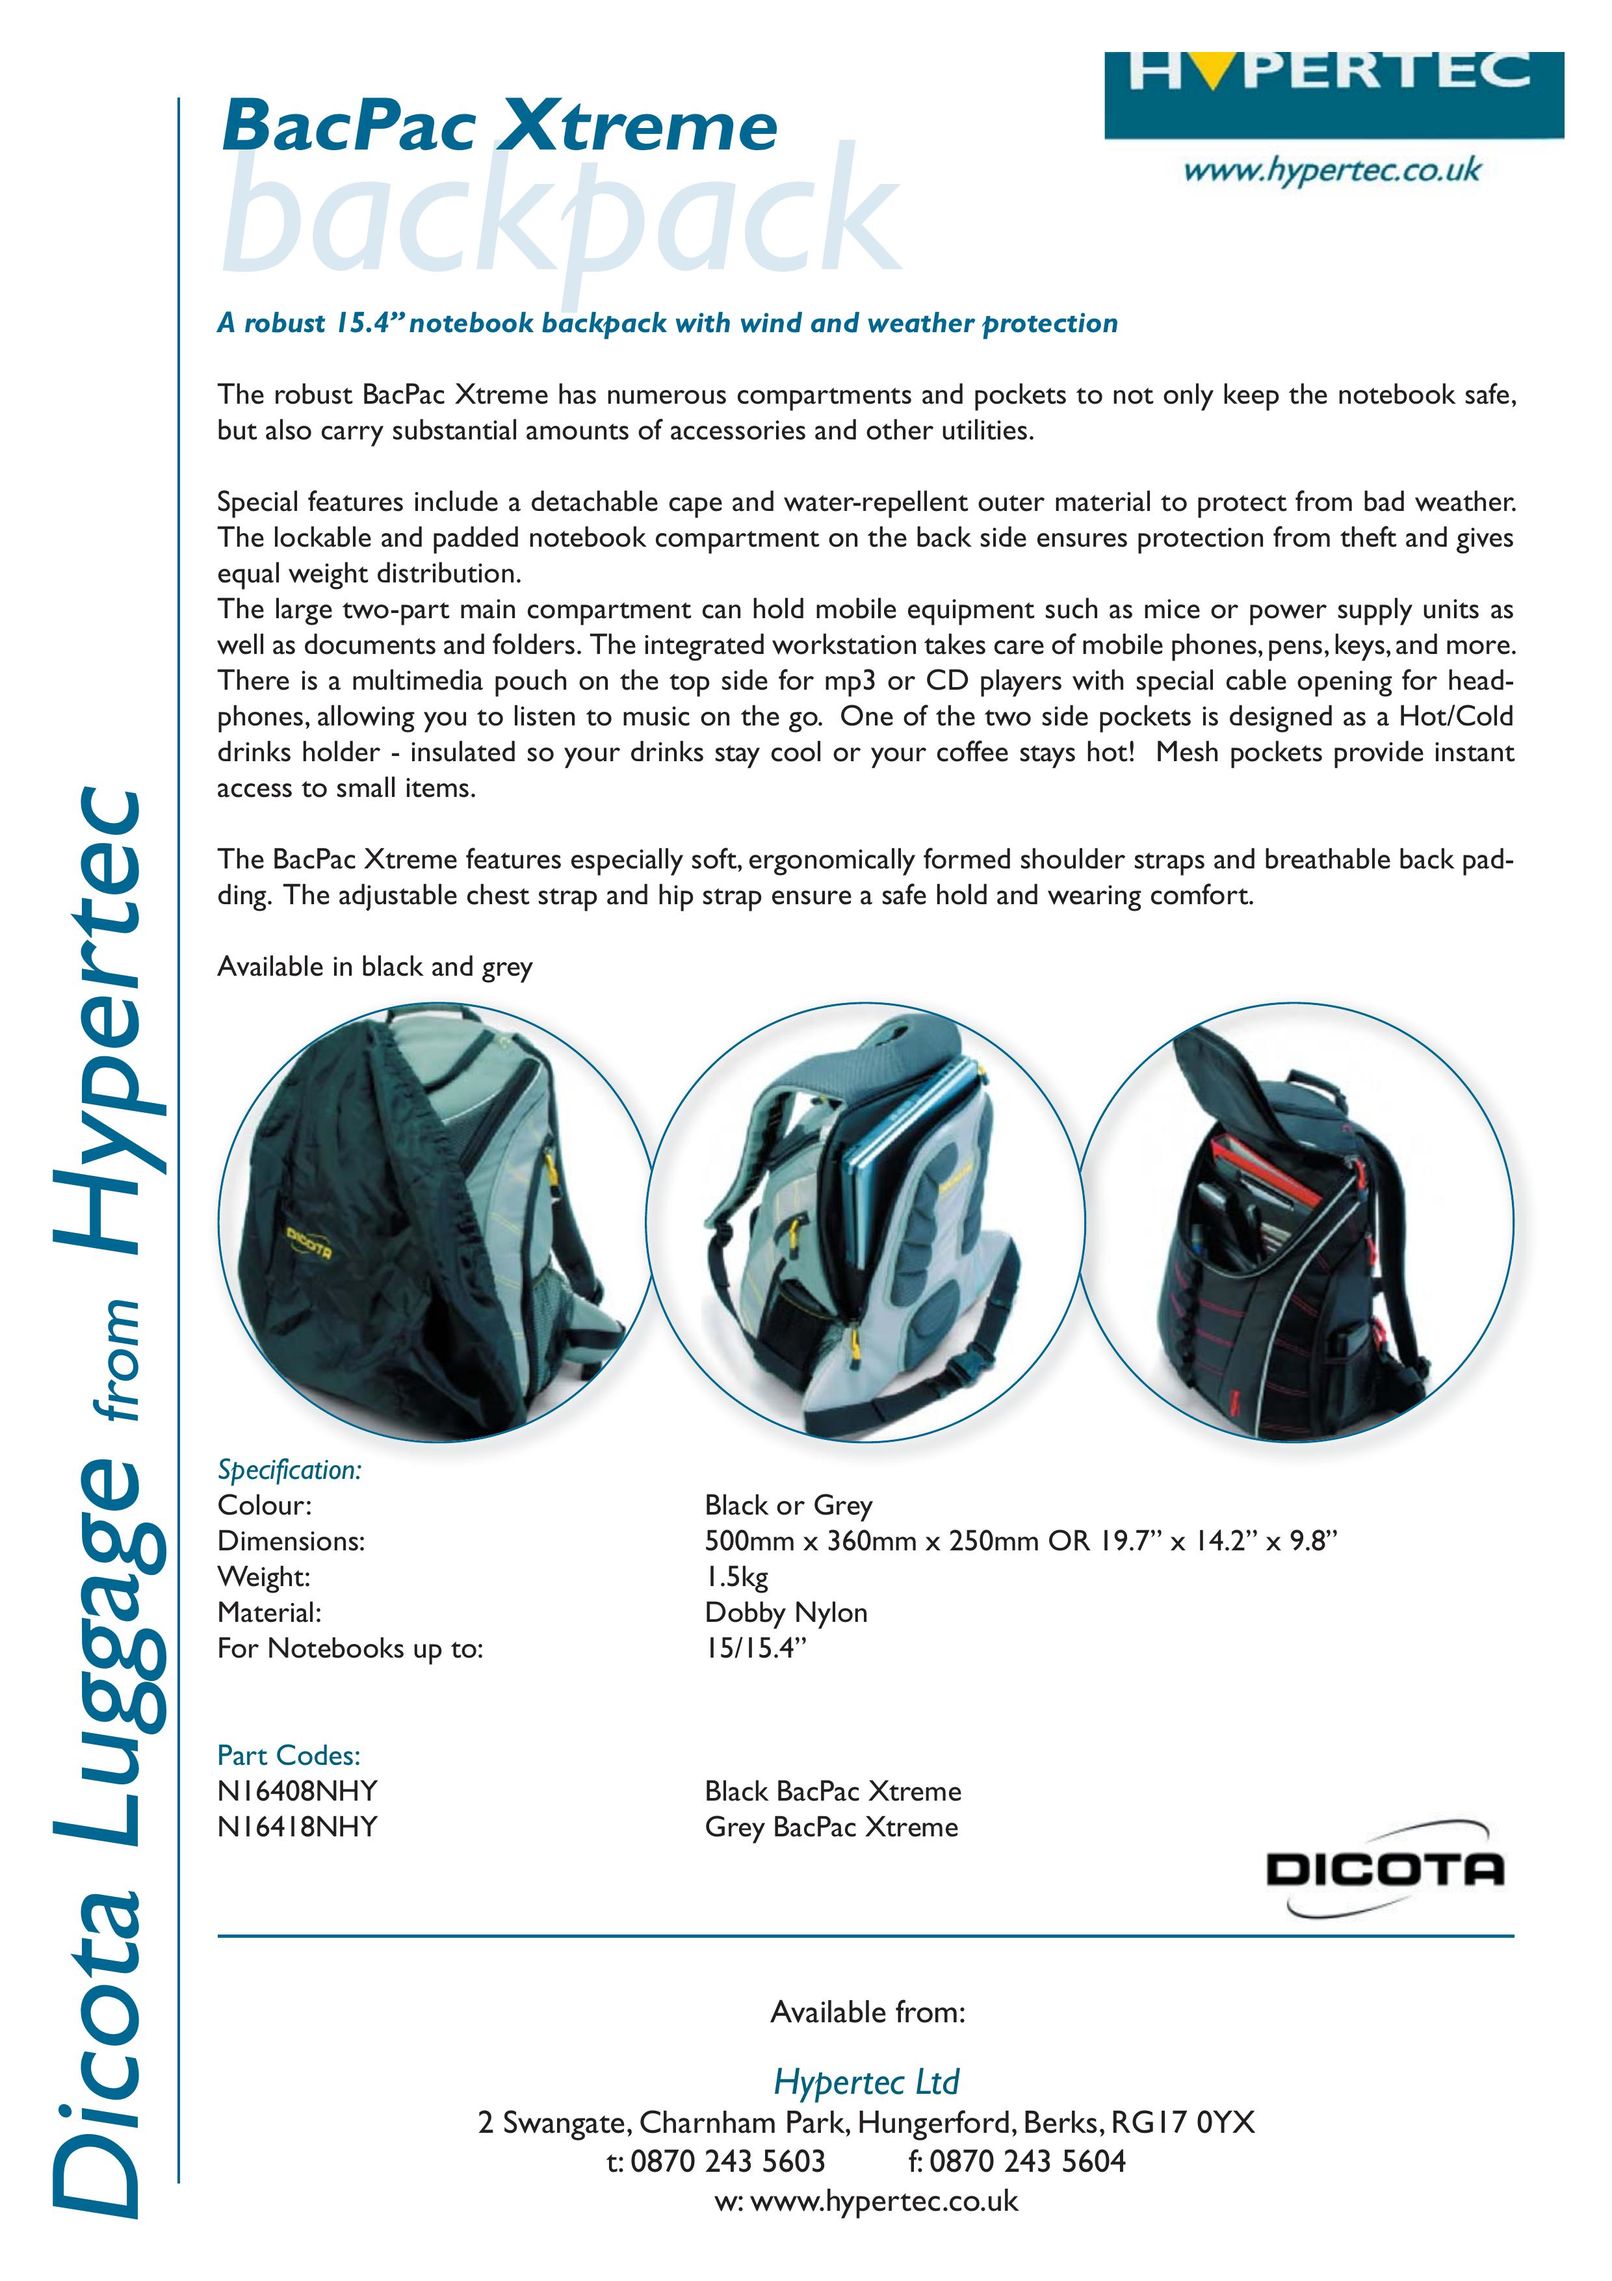 Dicota N16418NHY Carrying Case User Manual